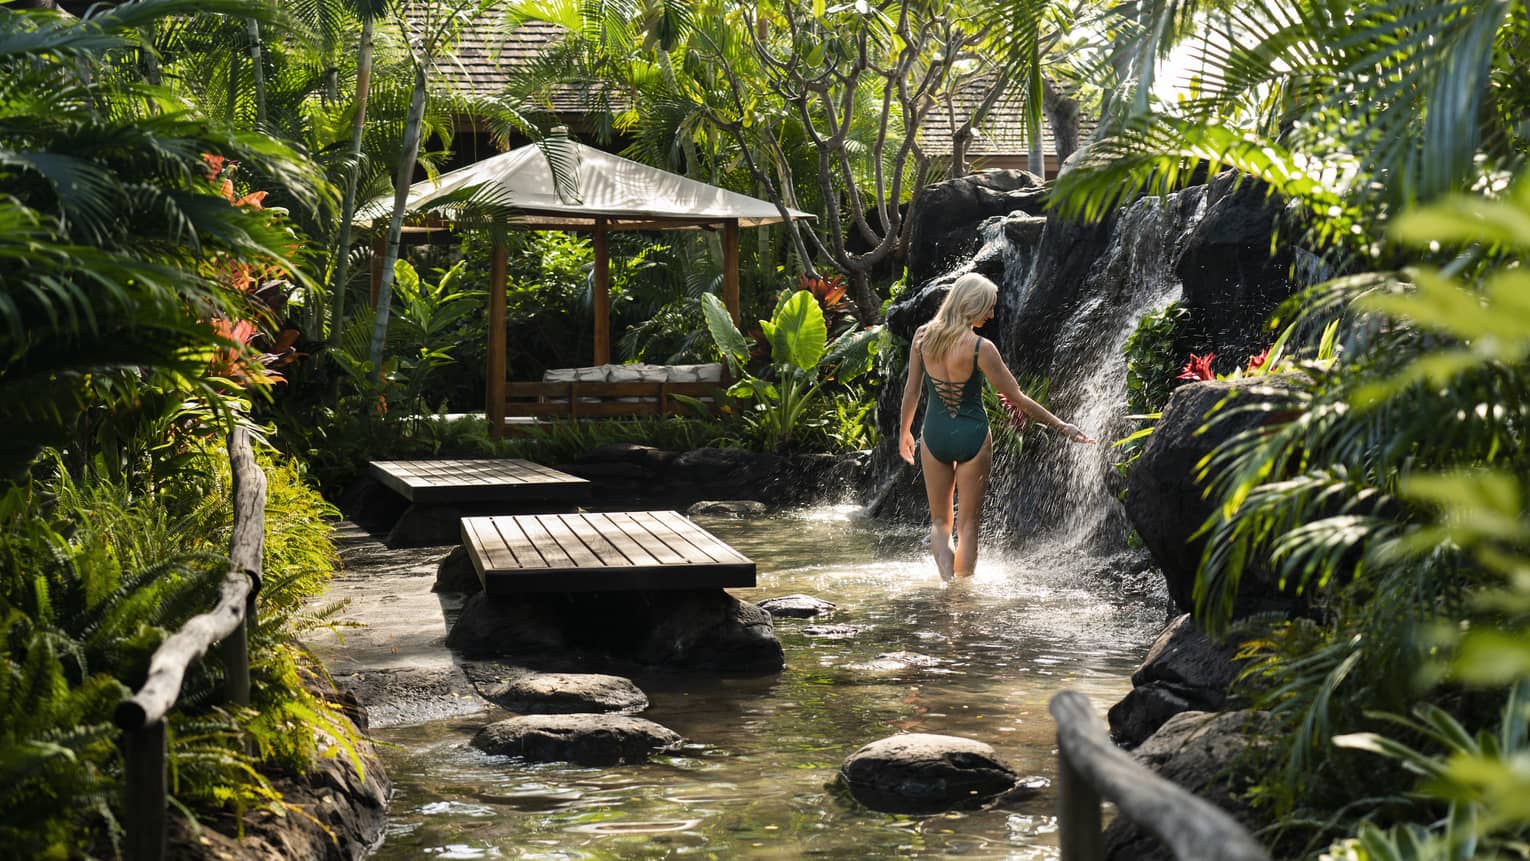 Woman wearing swimsuit stands near garden waterfall and wood platform